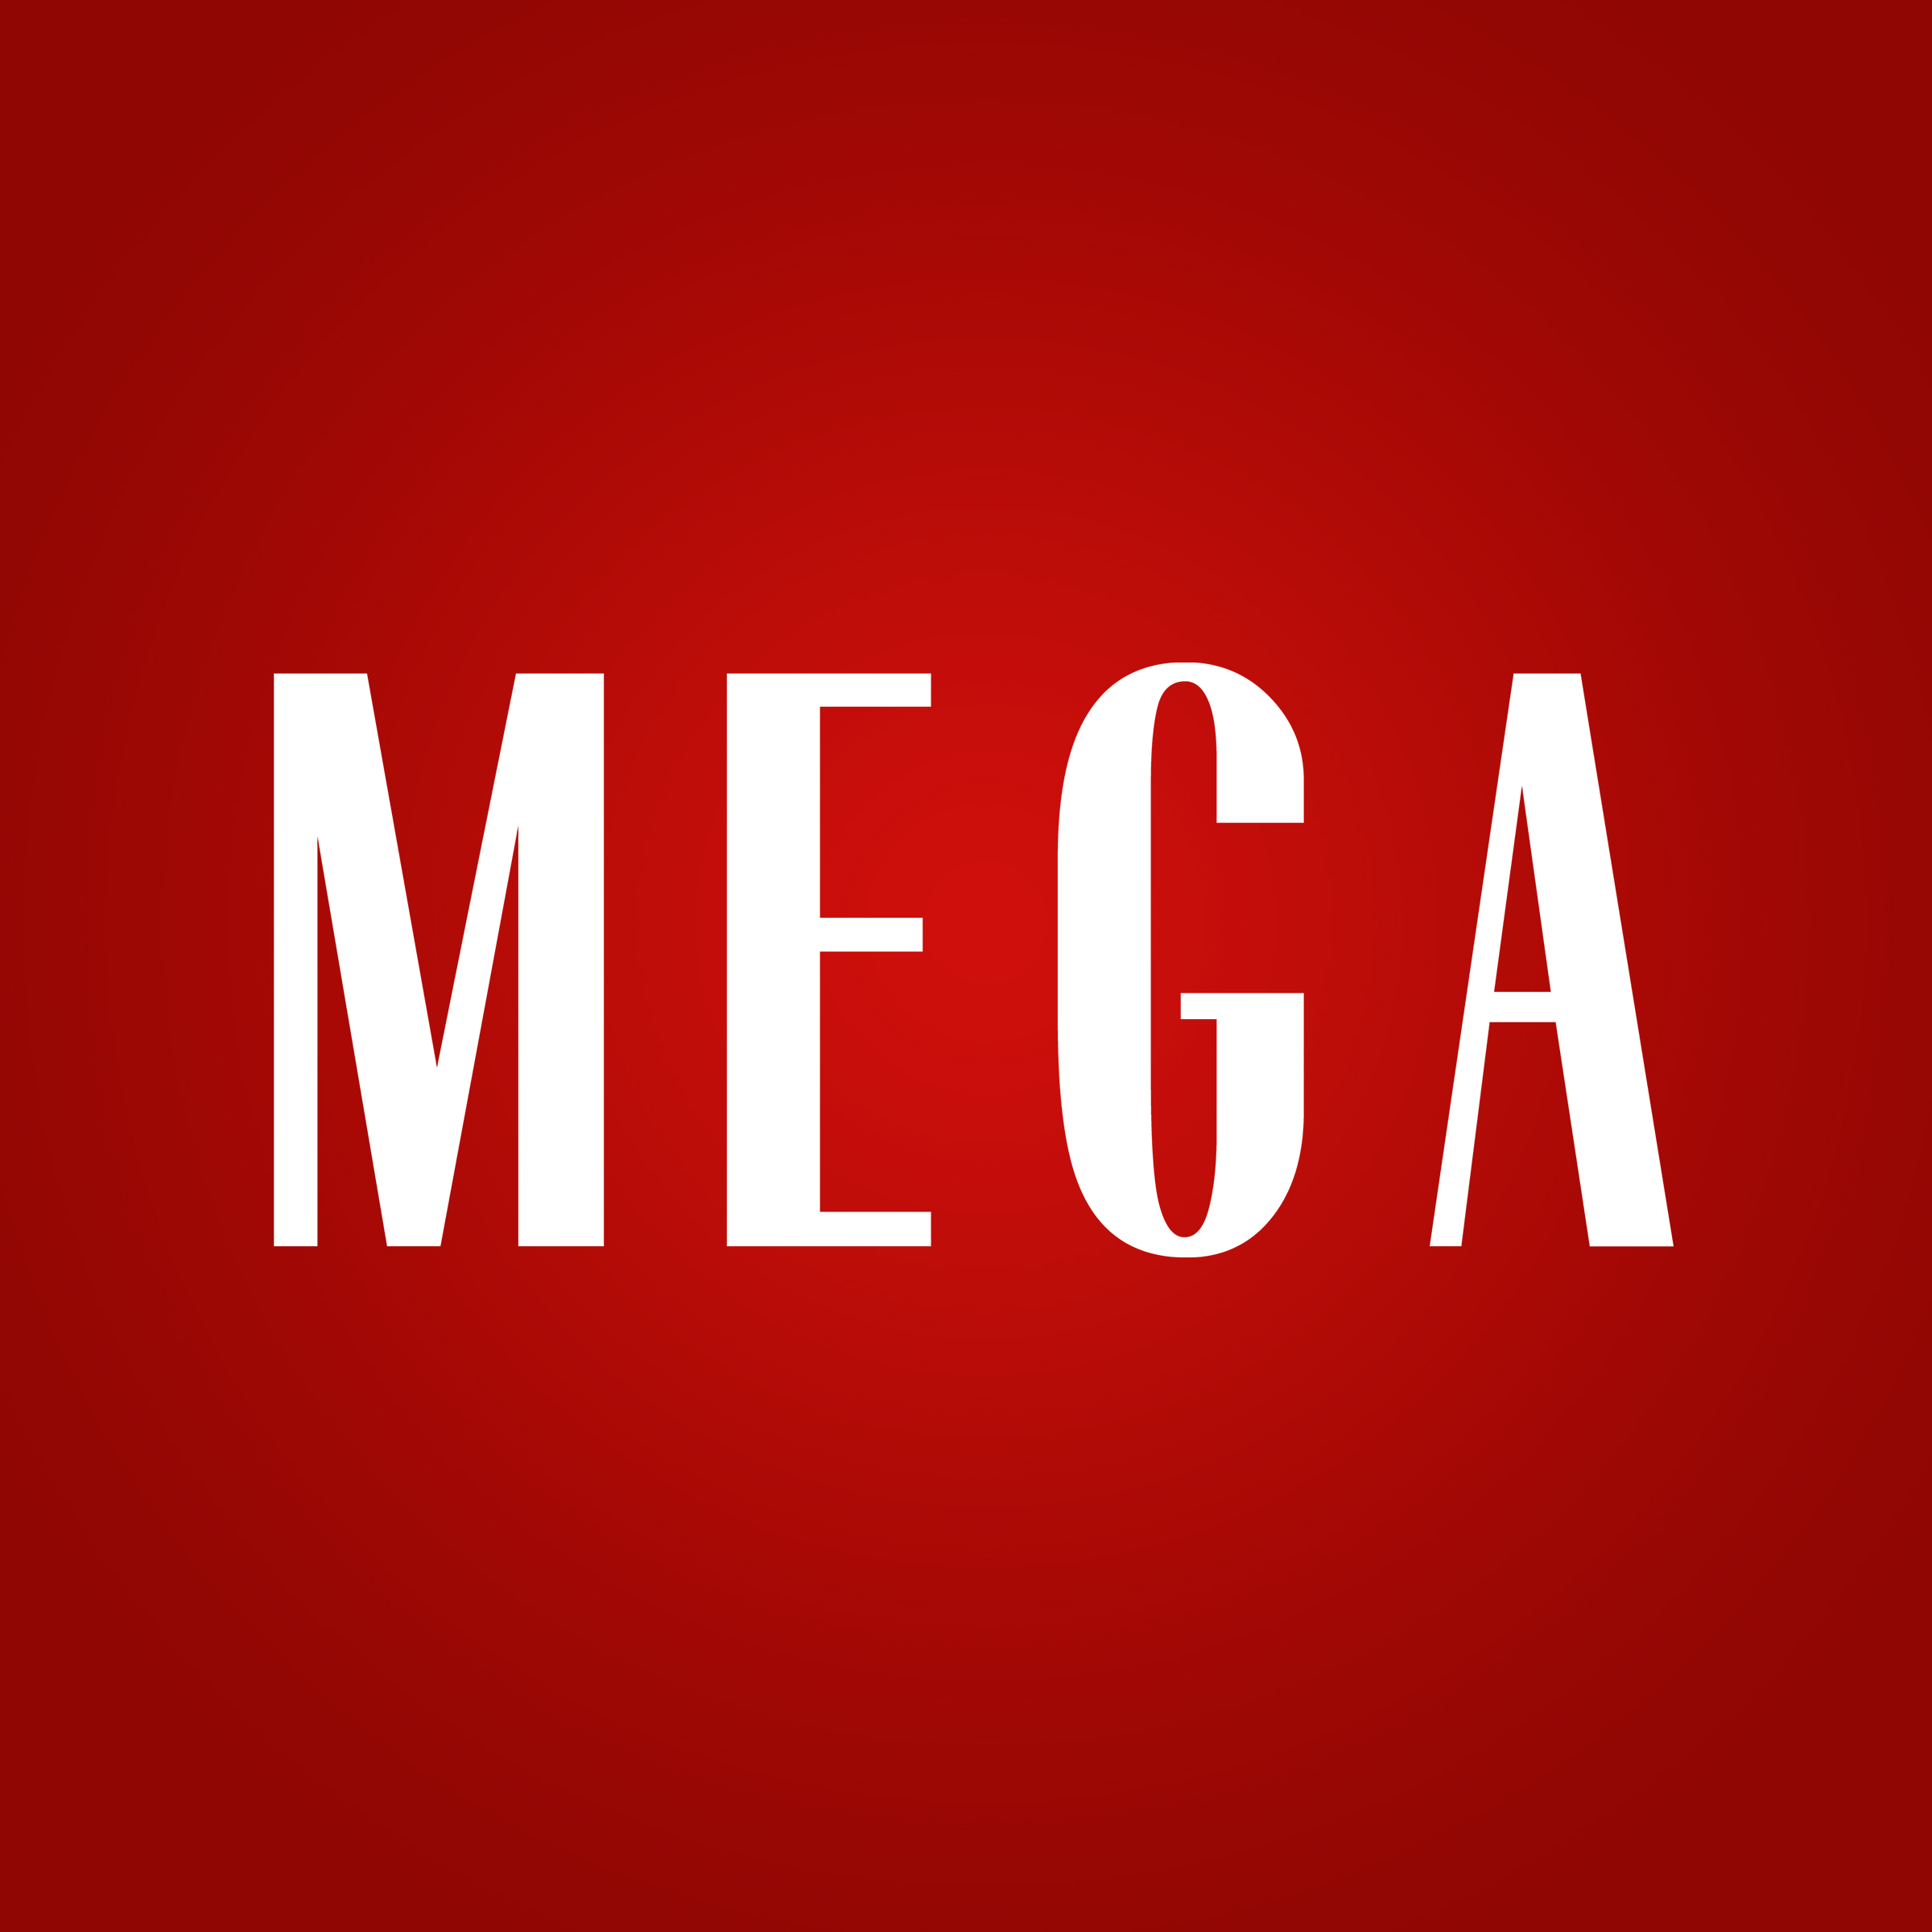 MEGA's new logo